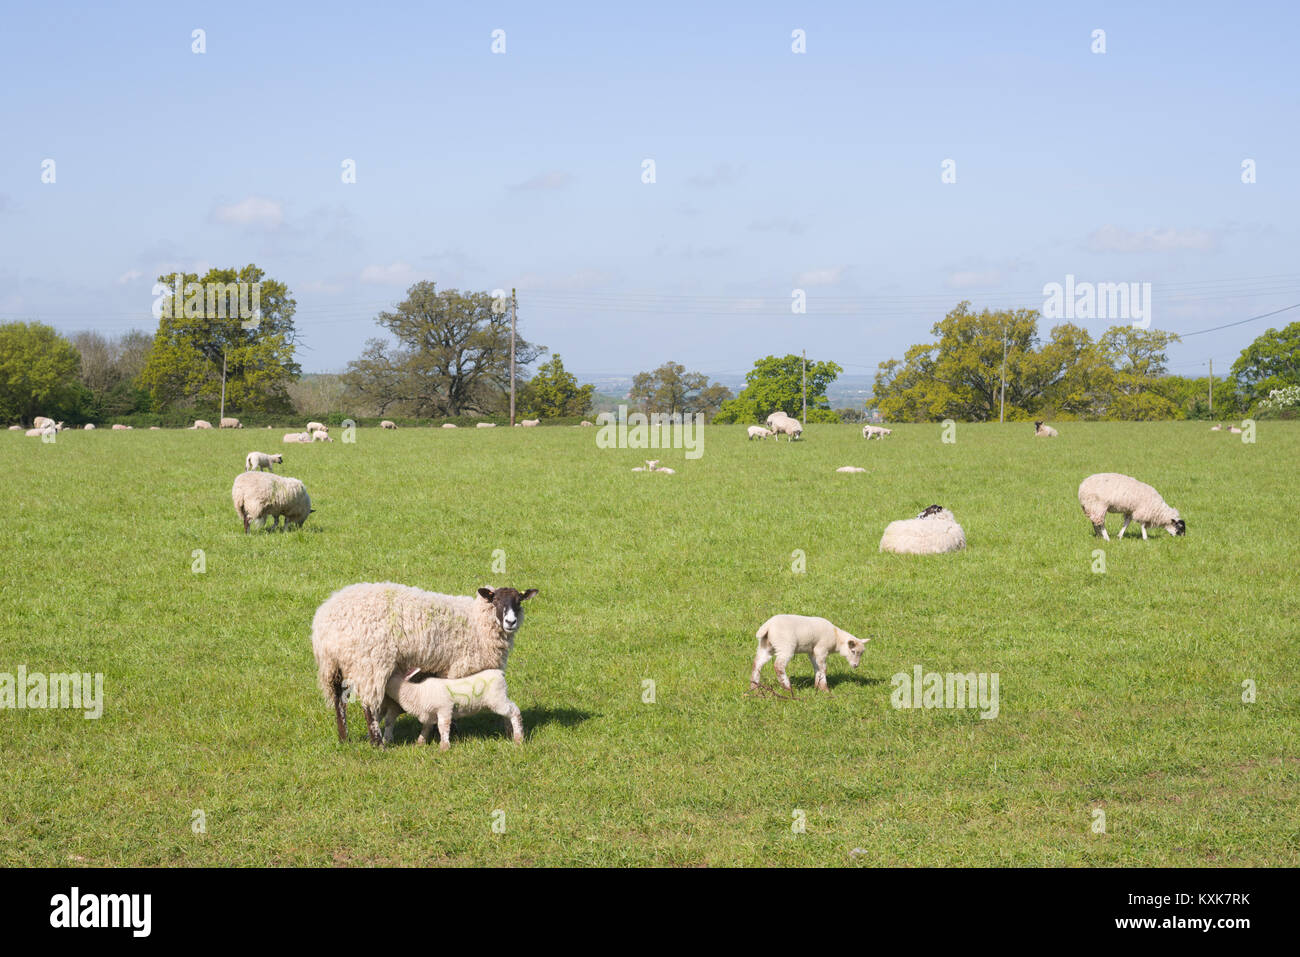 Grazing sheep with young lambs in a field on Friz Hill, near Walton, Warwickshire, England, UK, Europe Stock Photo